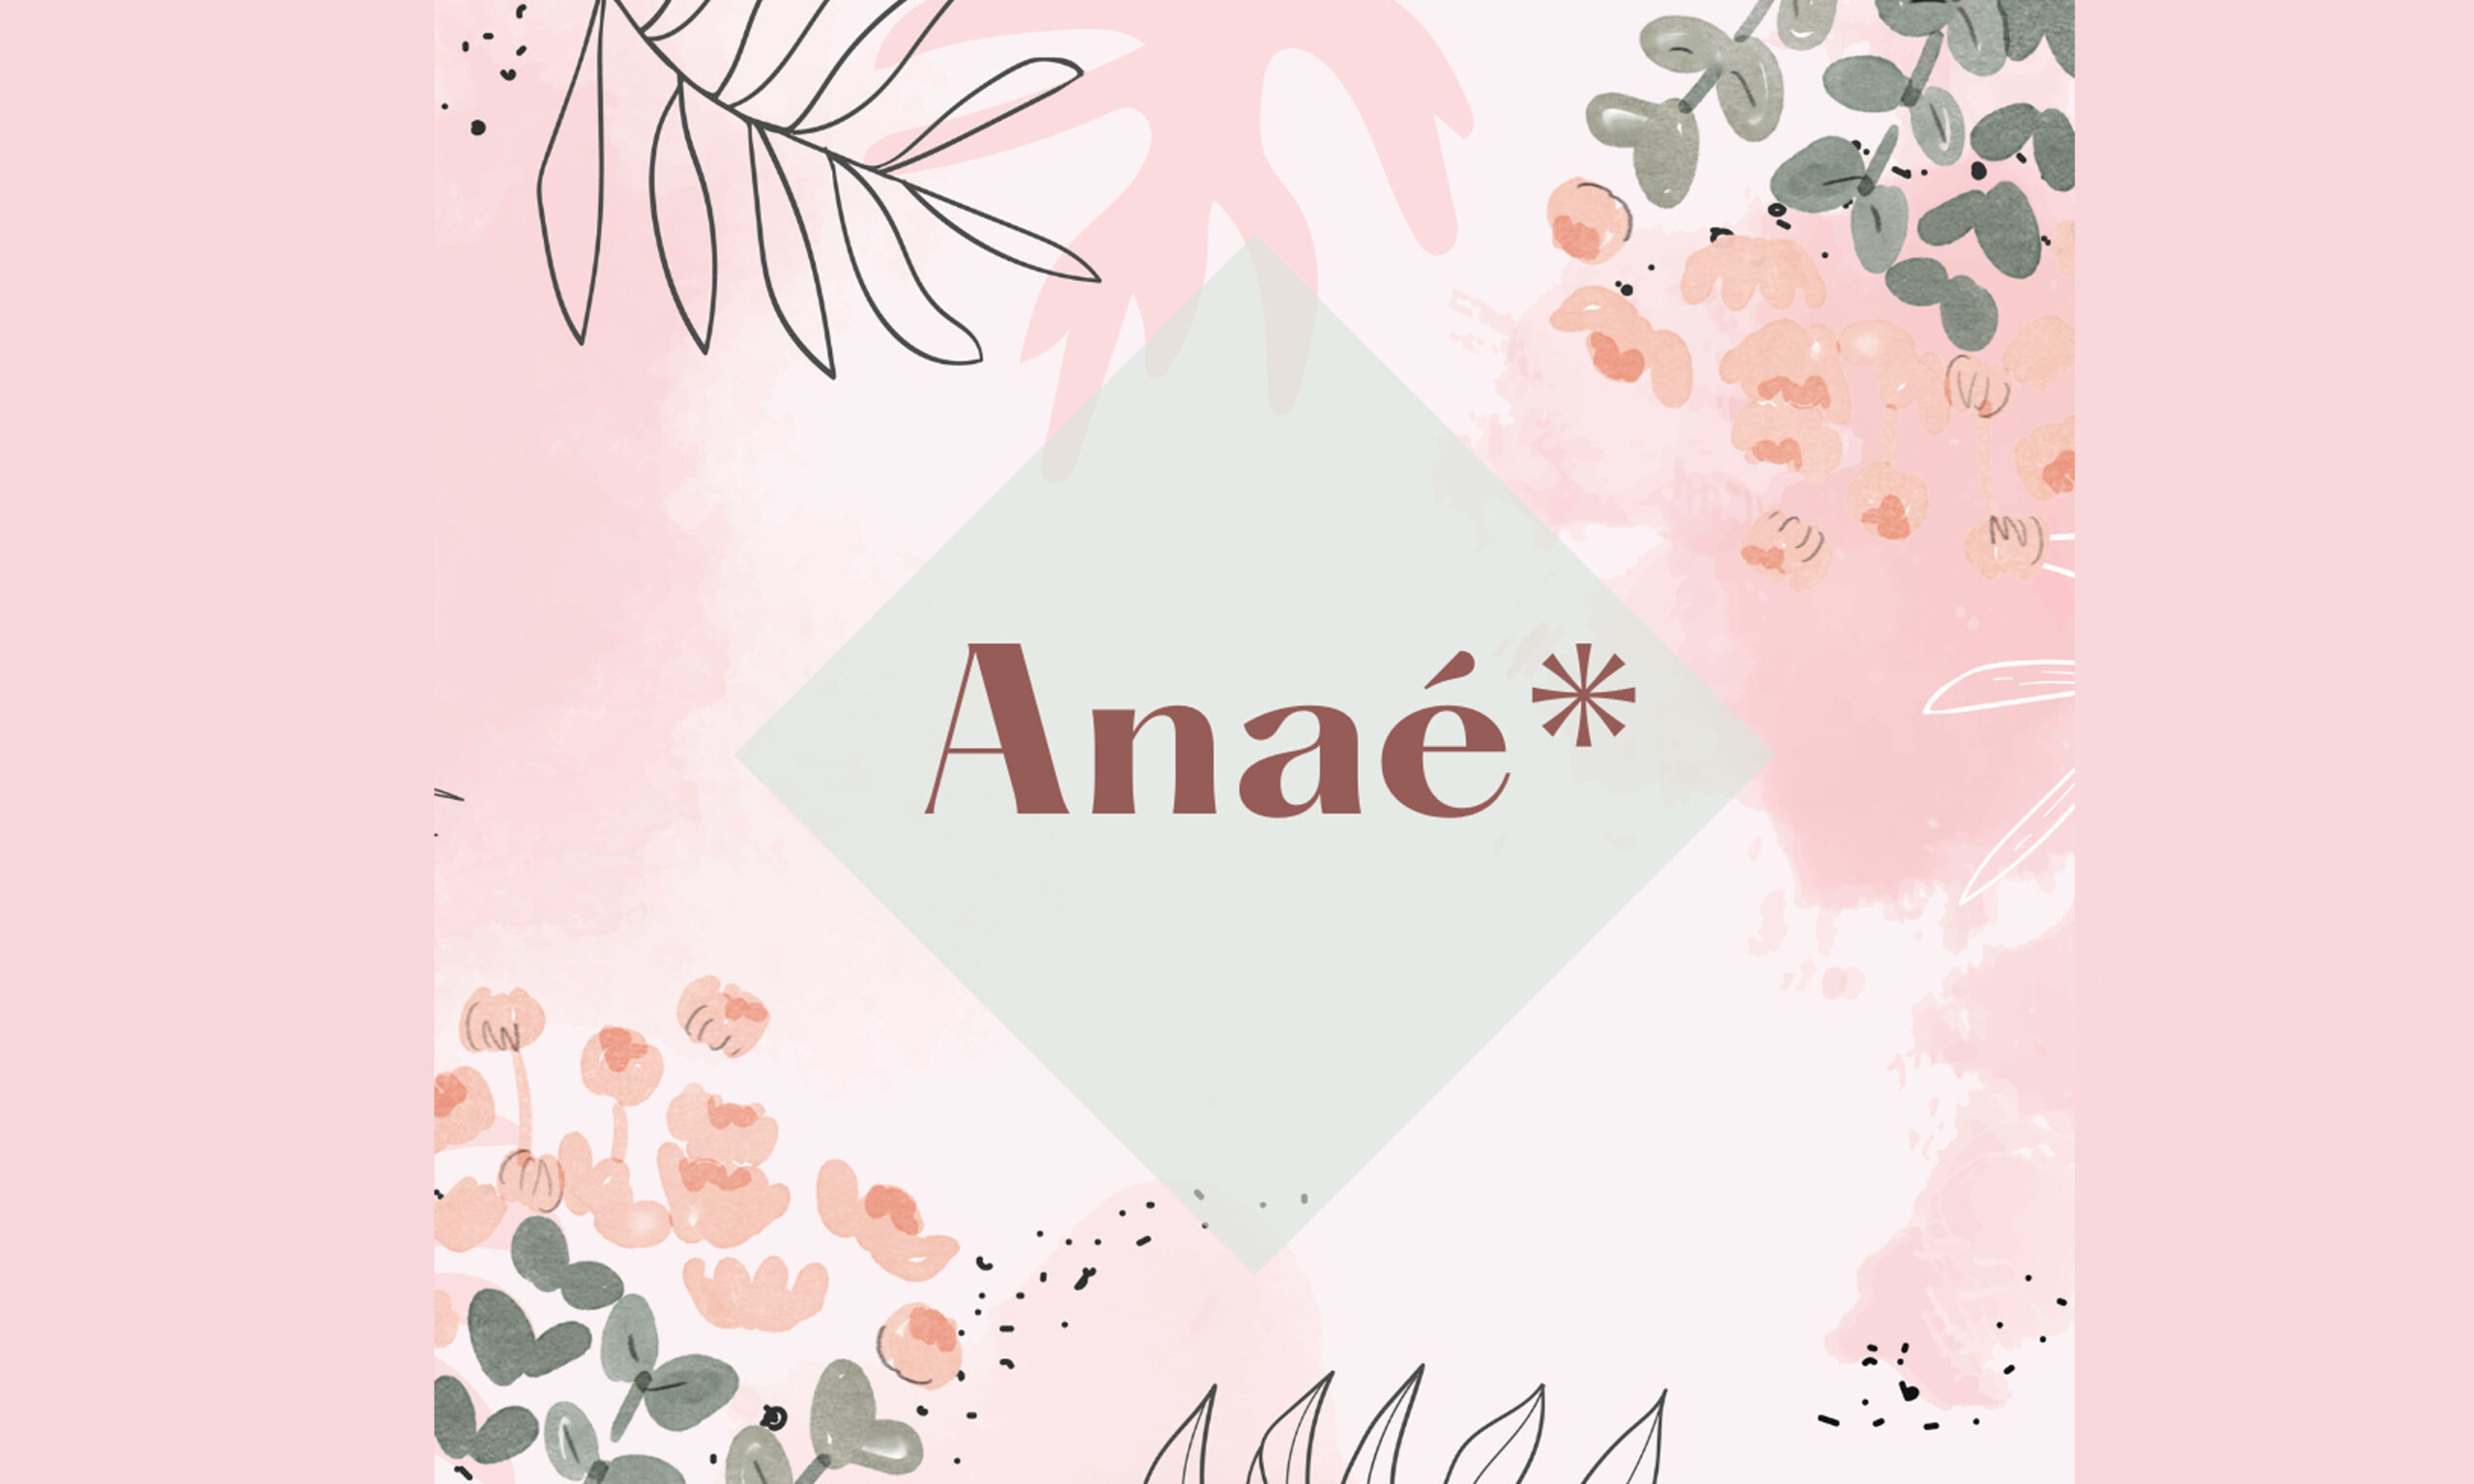 Anaé*